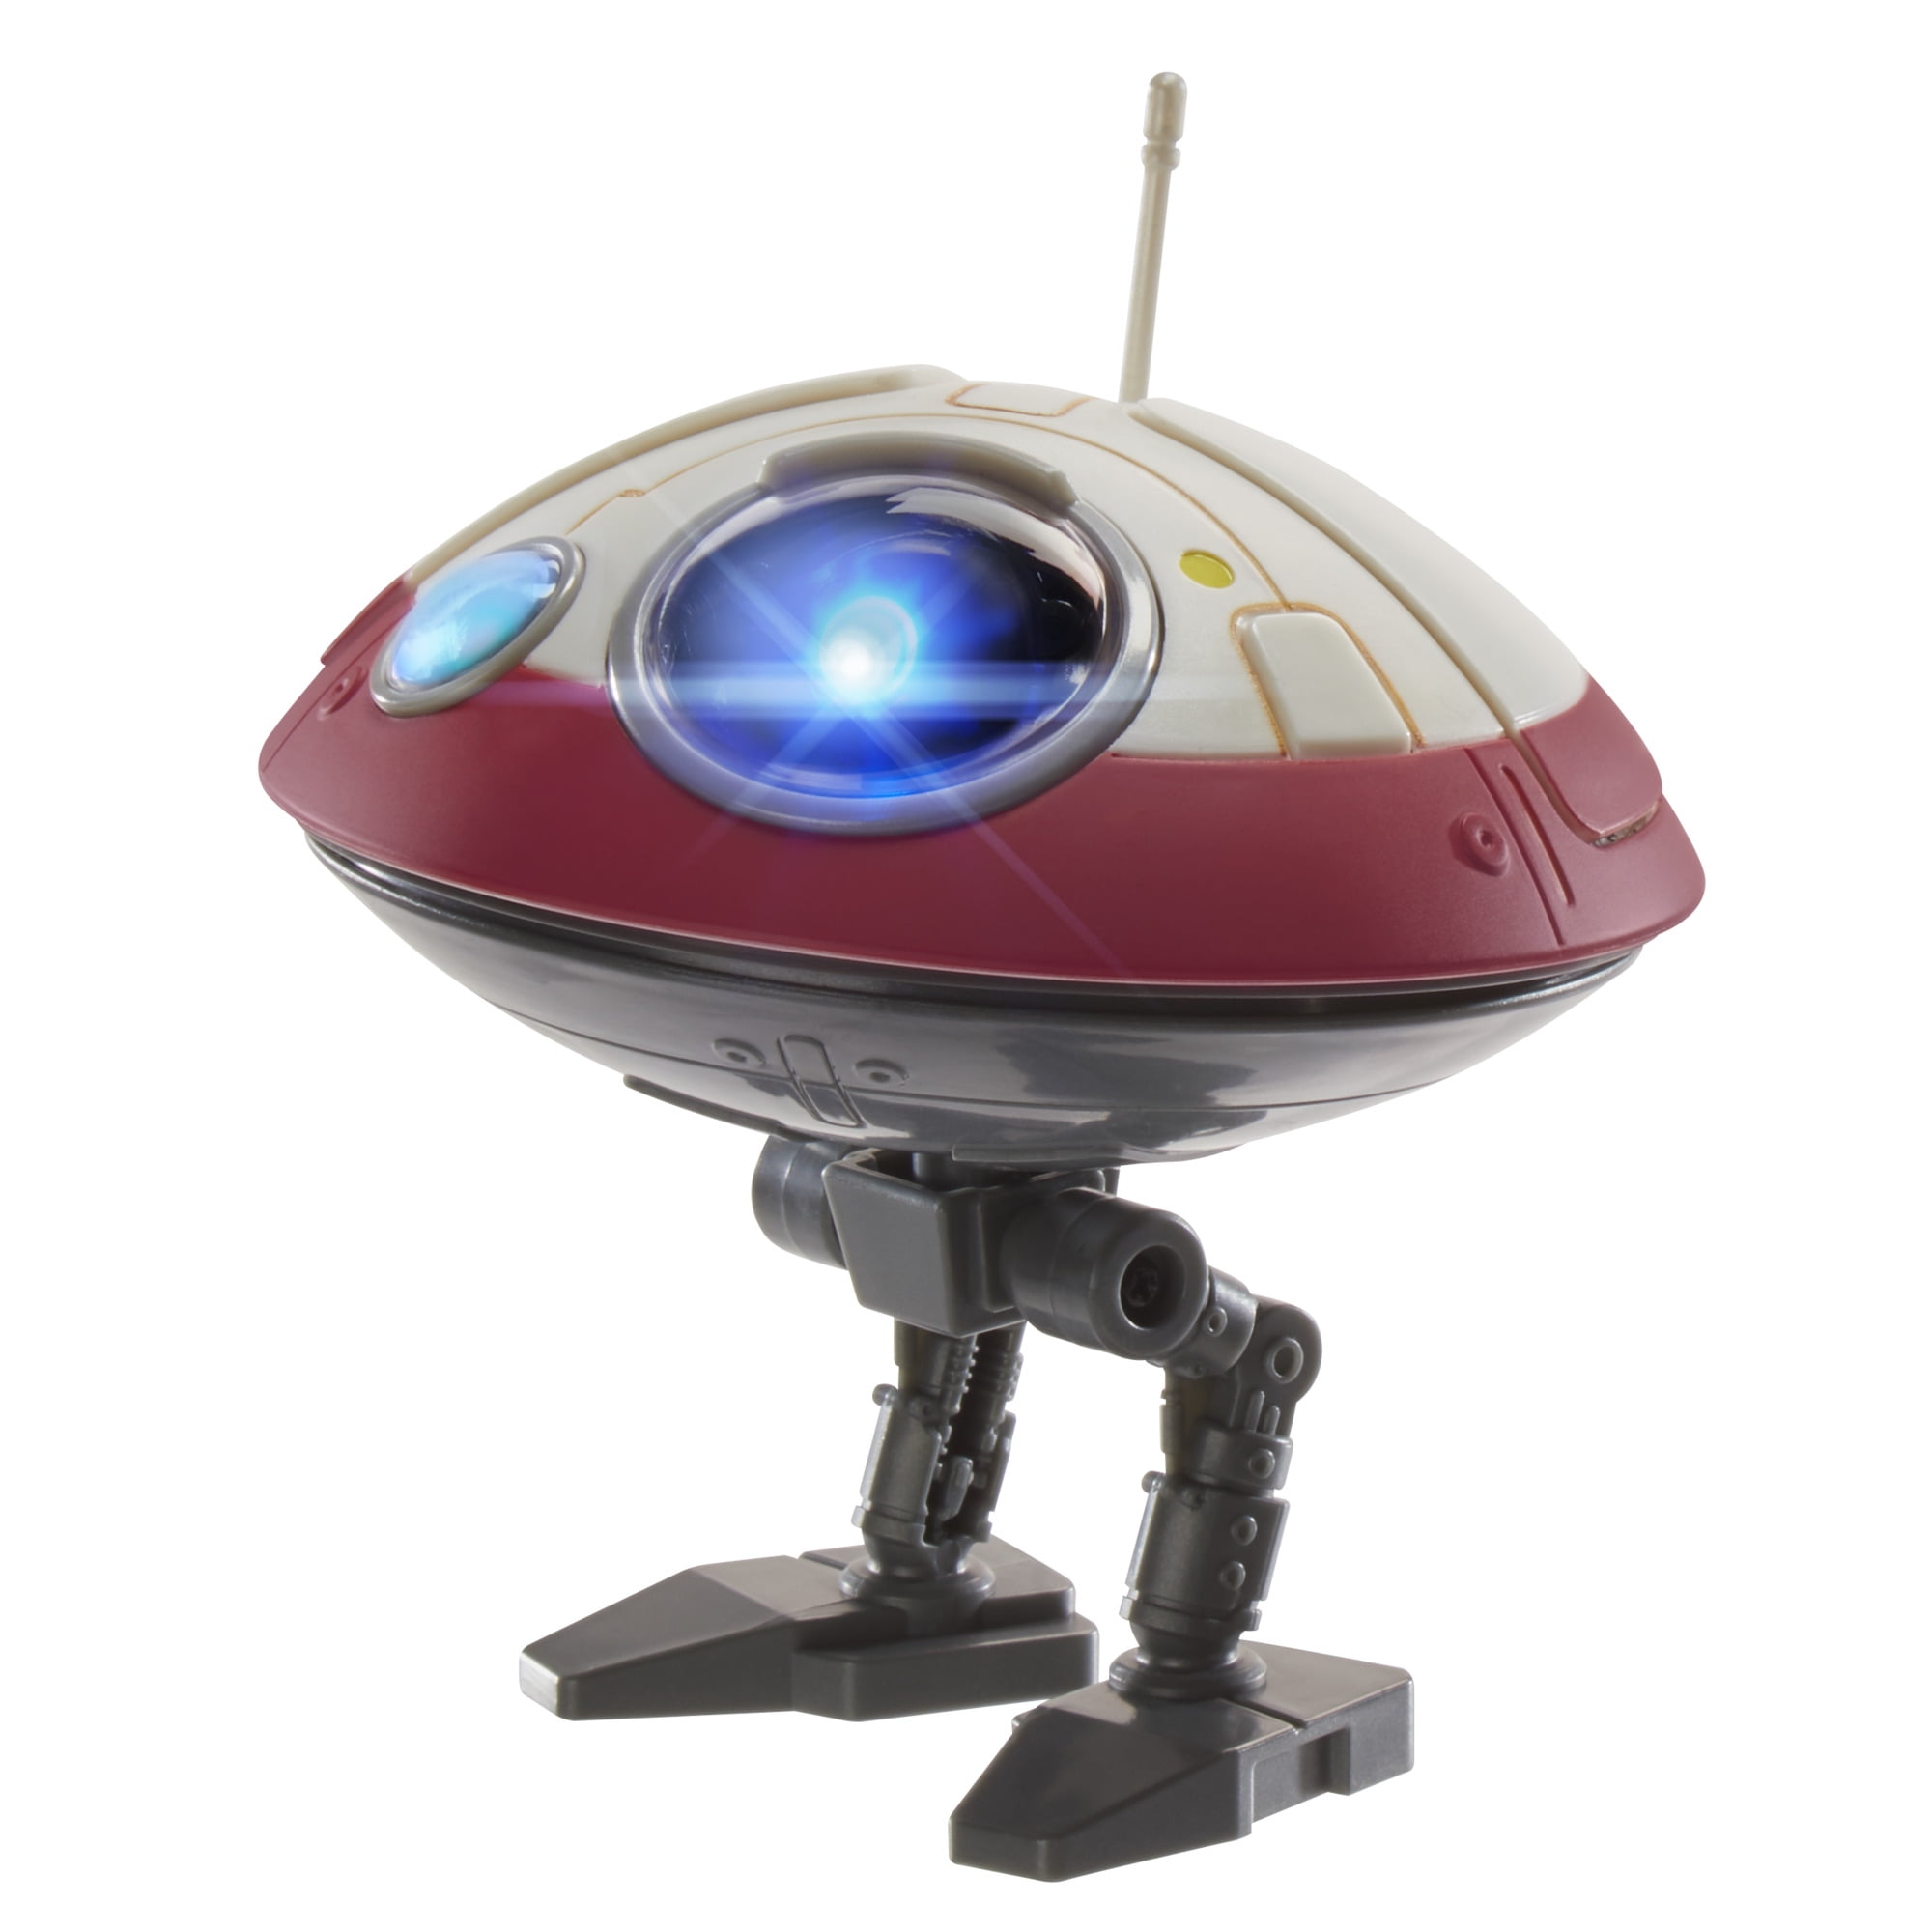 Star Wars L0-LA59 (Lola) Droid Toy, Obi-Wan Kenobi Series-Inspired, Interactive Toys